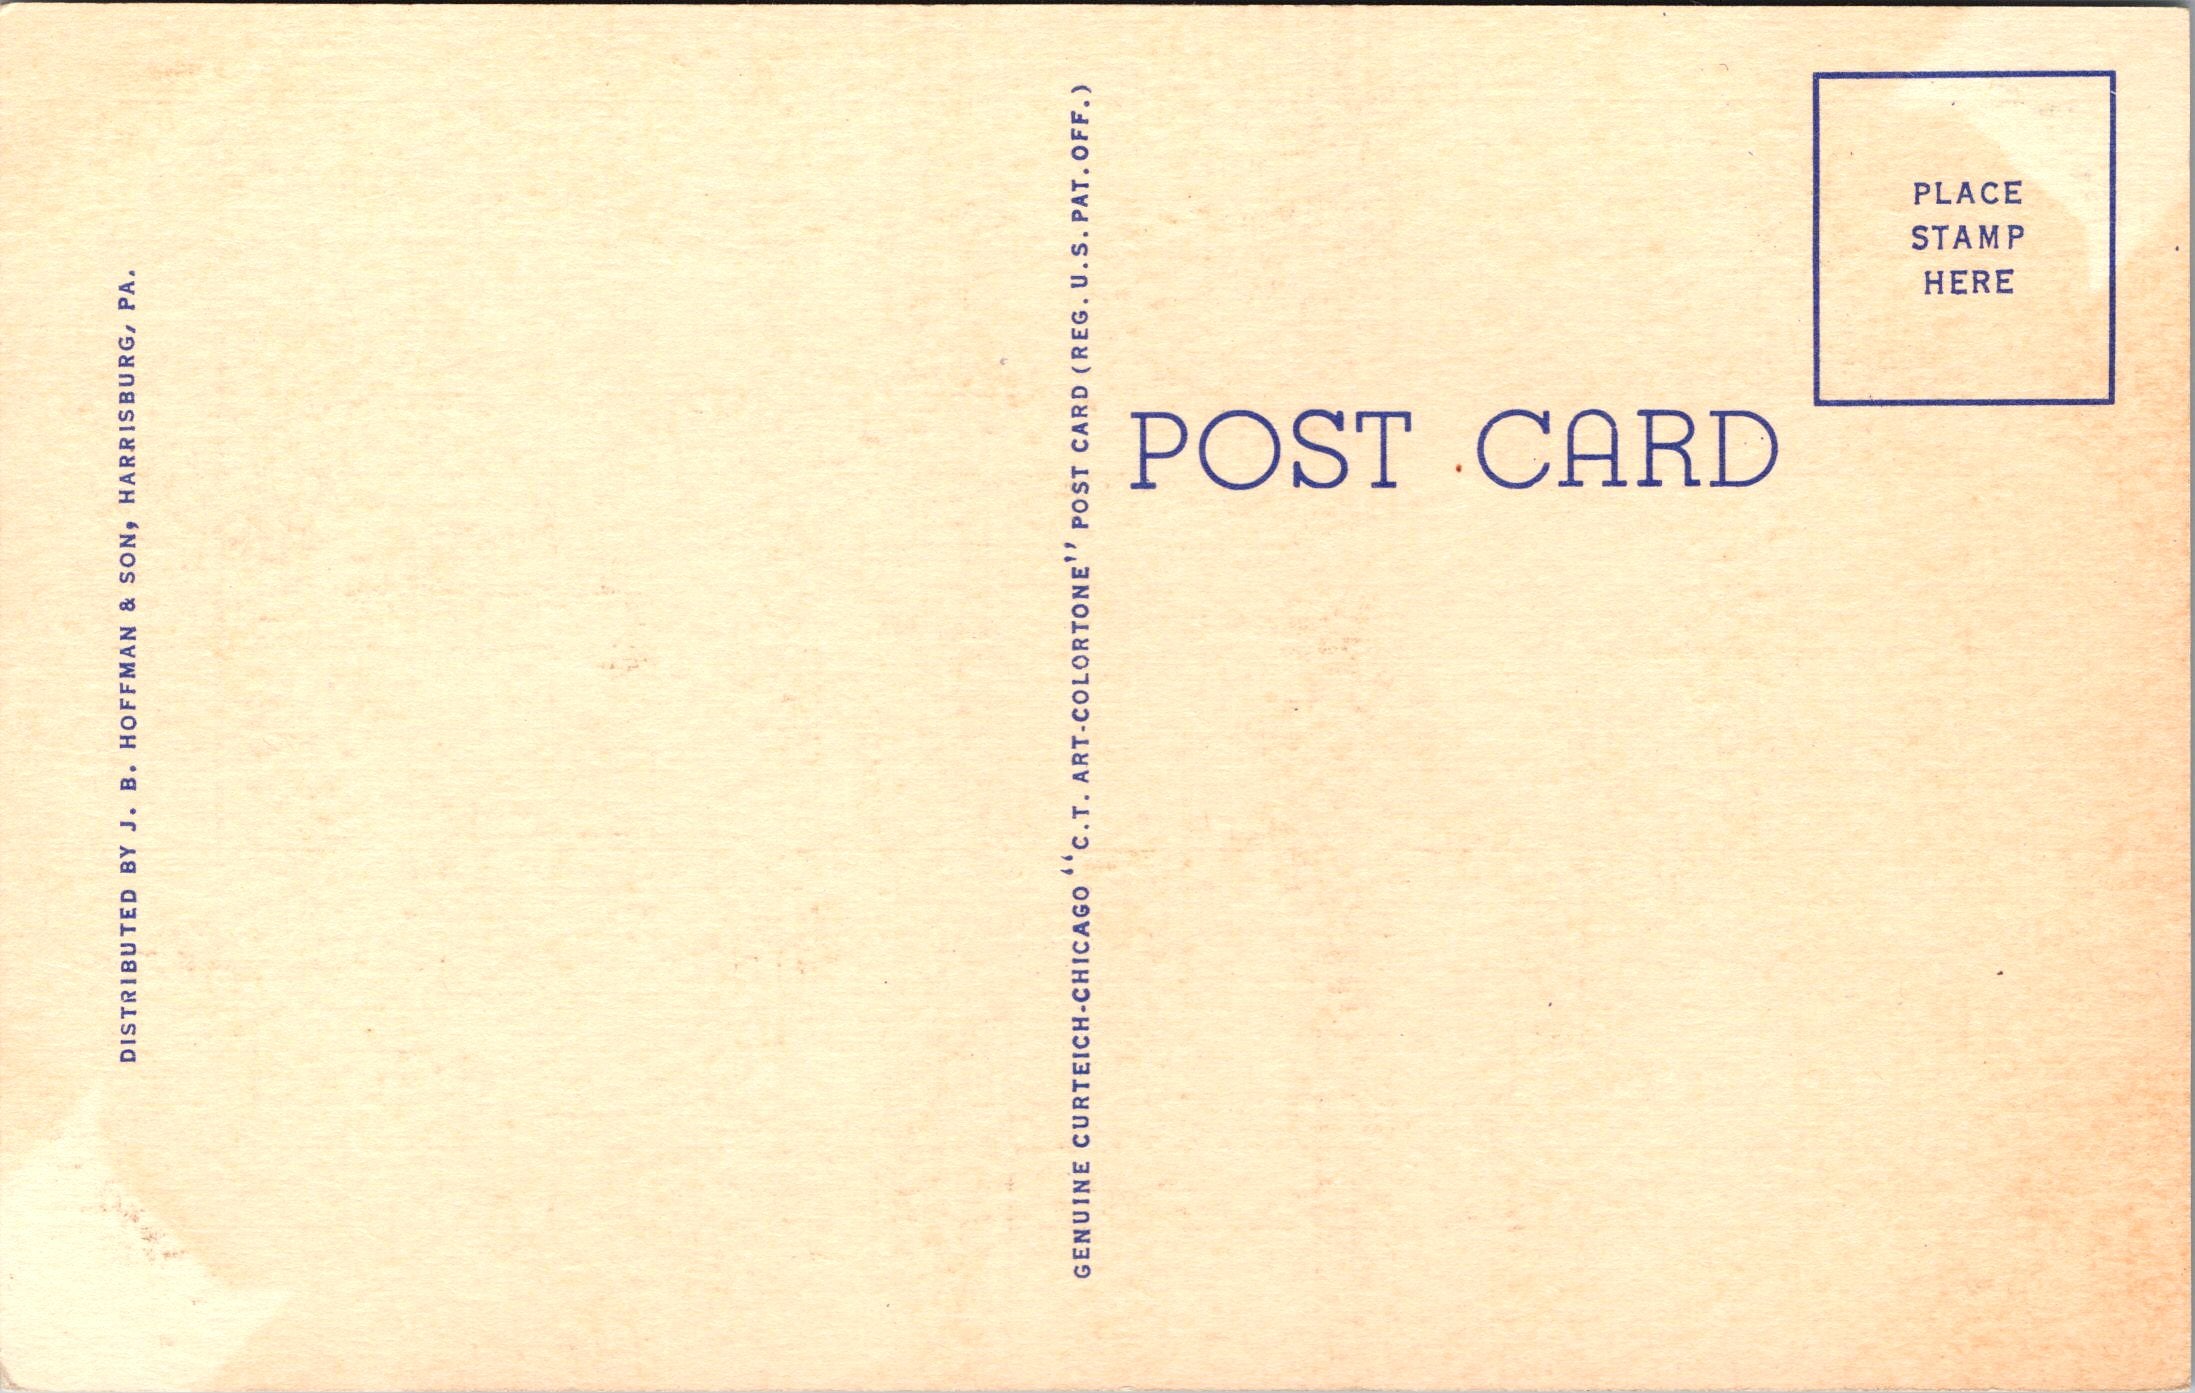 Susquehanna River Bridge, Pennsylvania Turnpike, Vintage Post Card